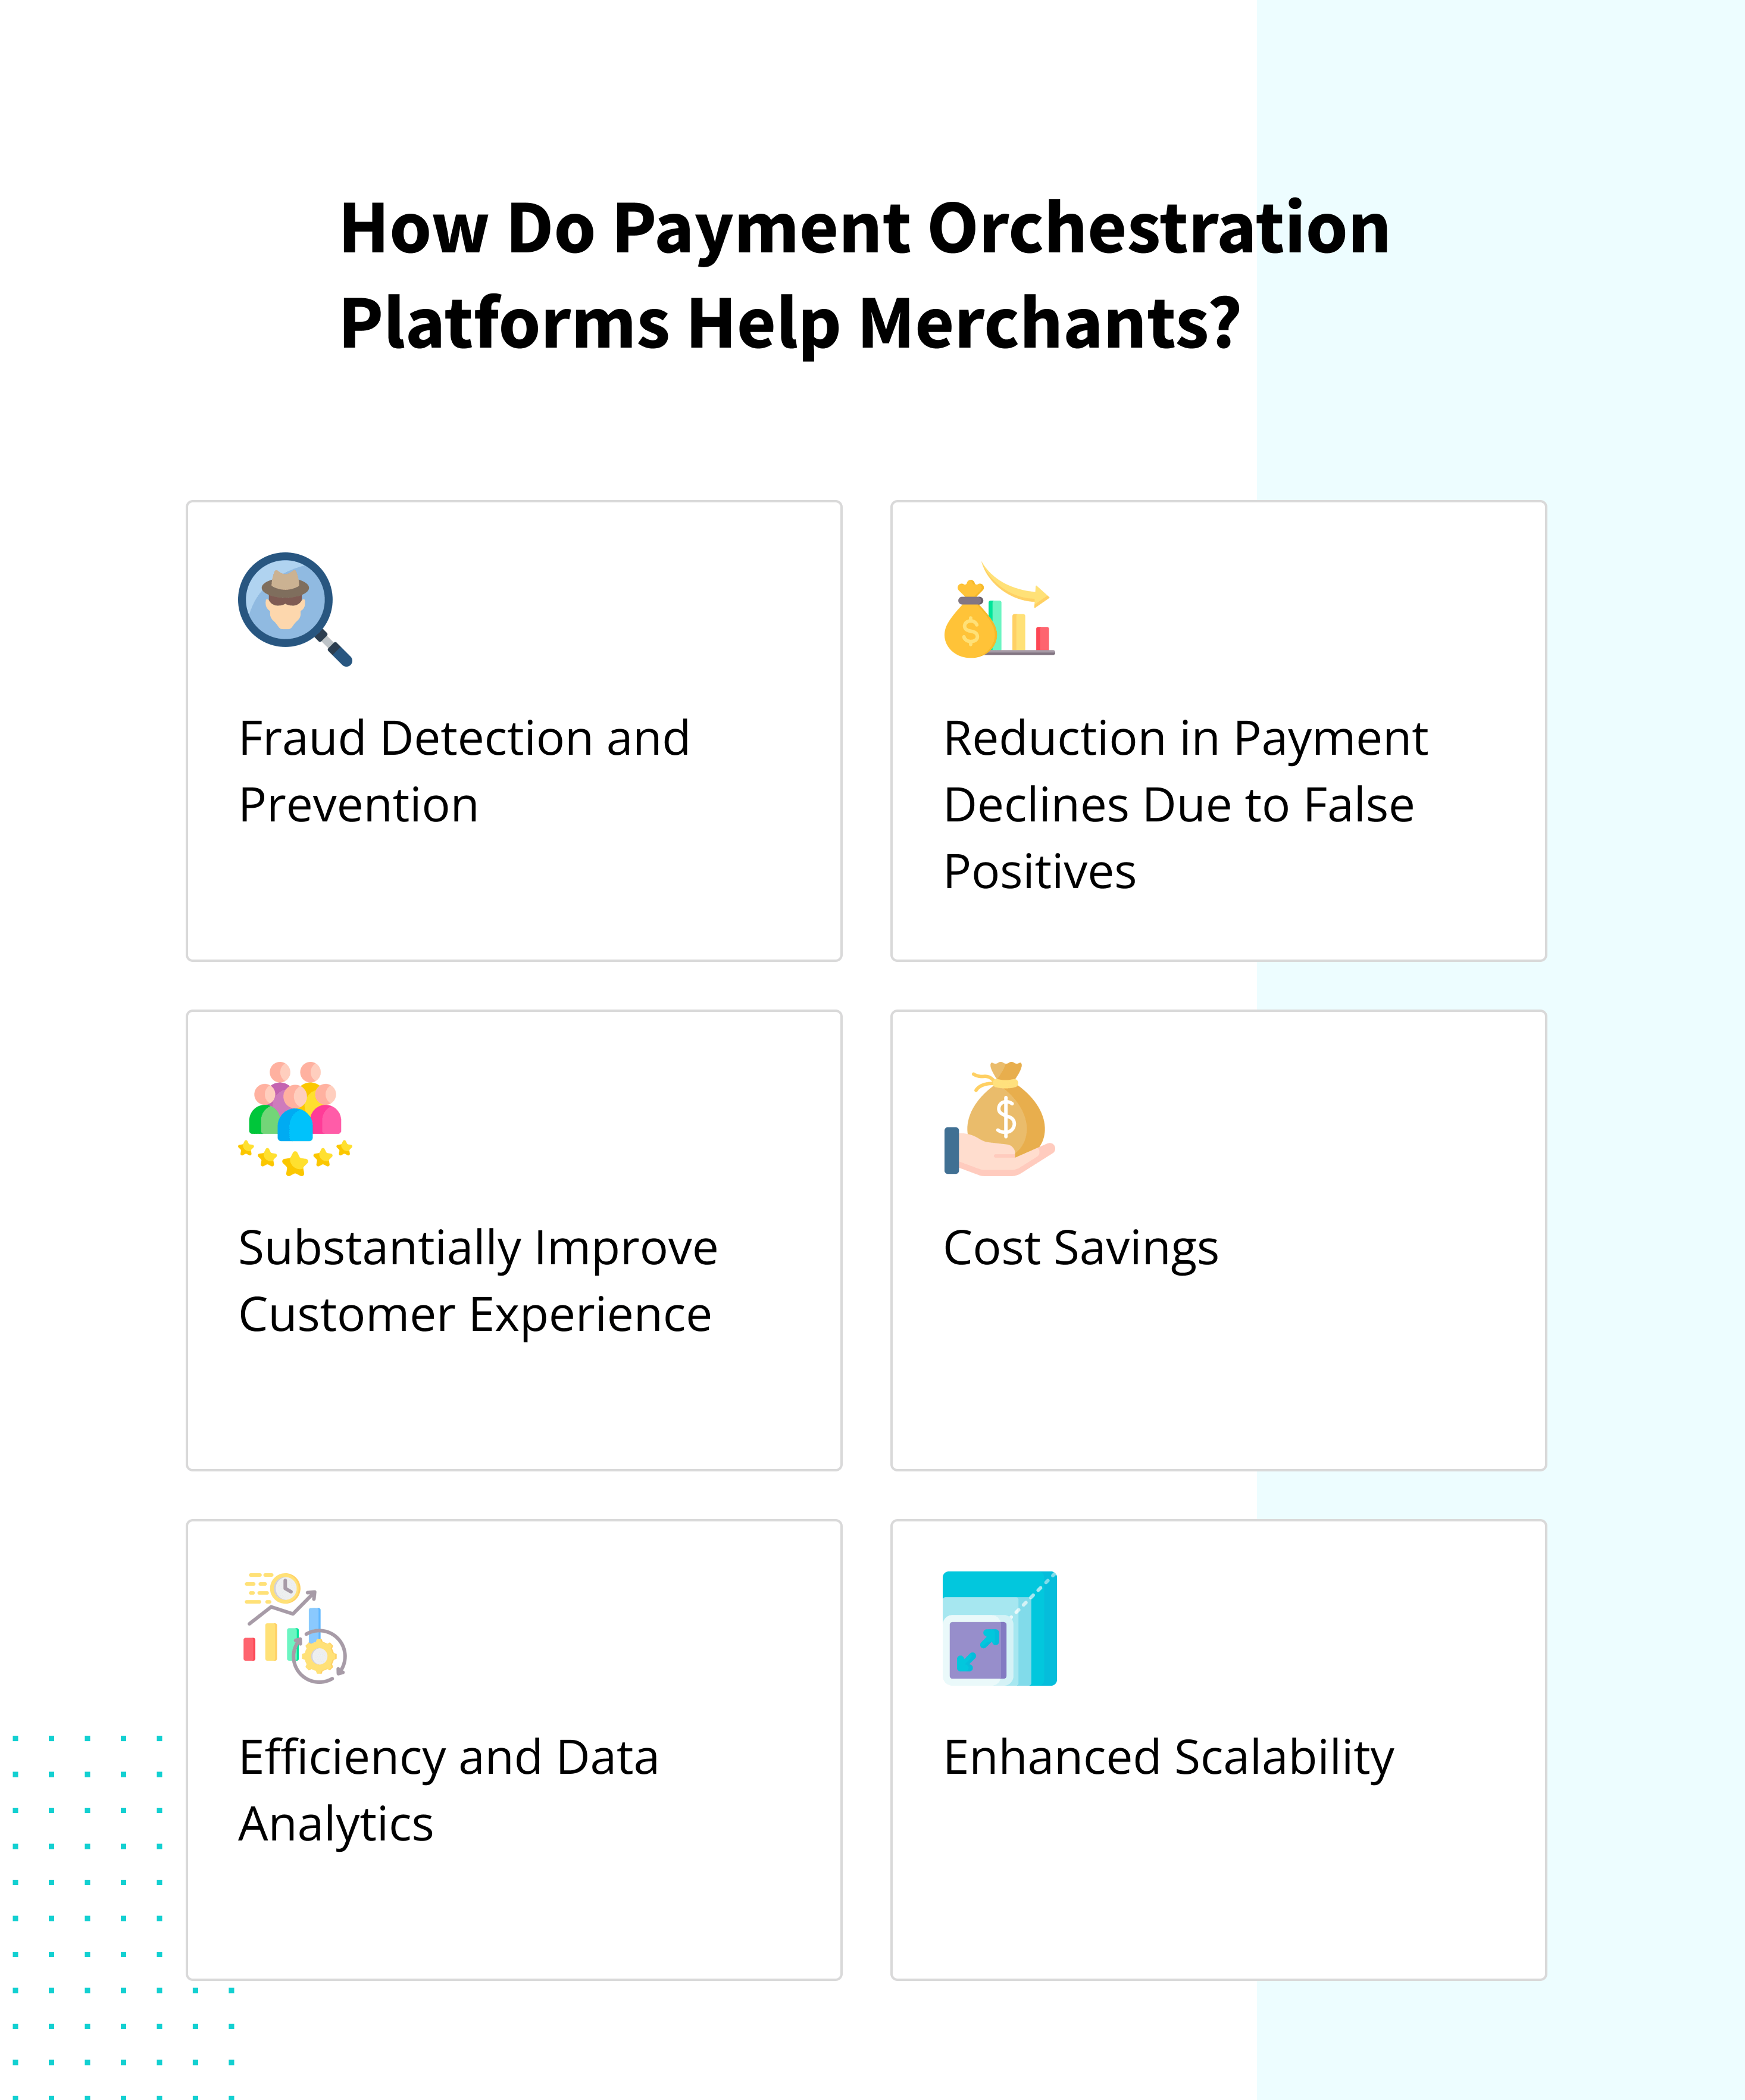 How Do Payment Orchestration Platforms Help Merchants?